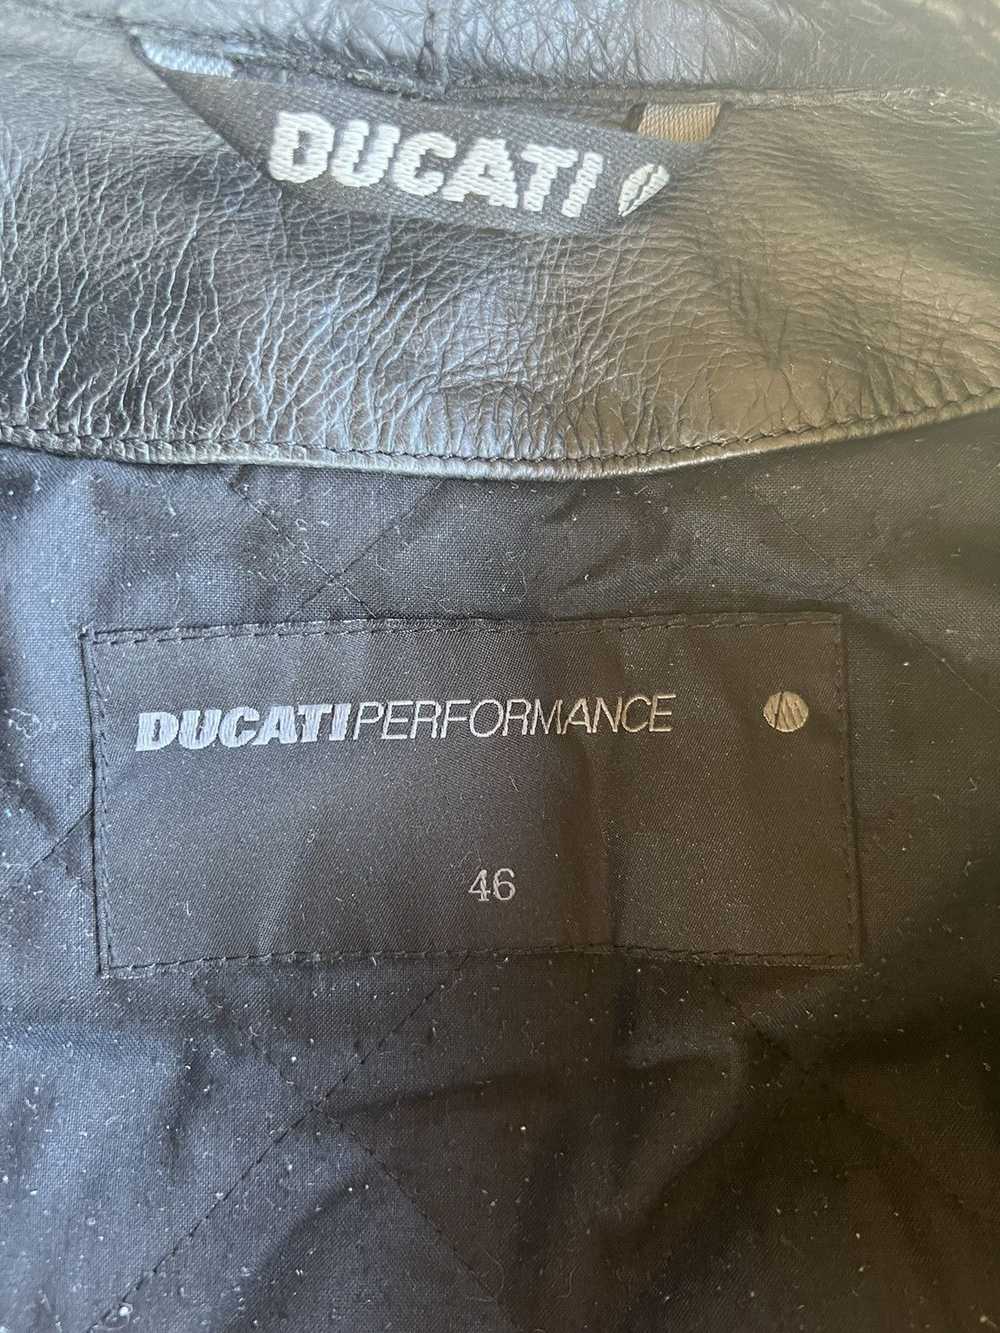 Ducati Ducati Old Times leather moto jacket - image 9